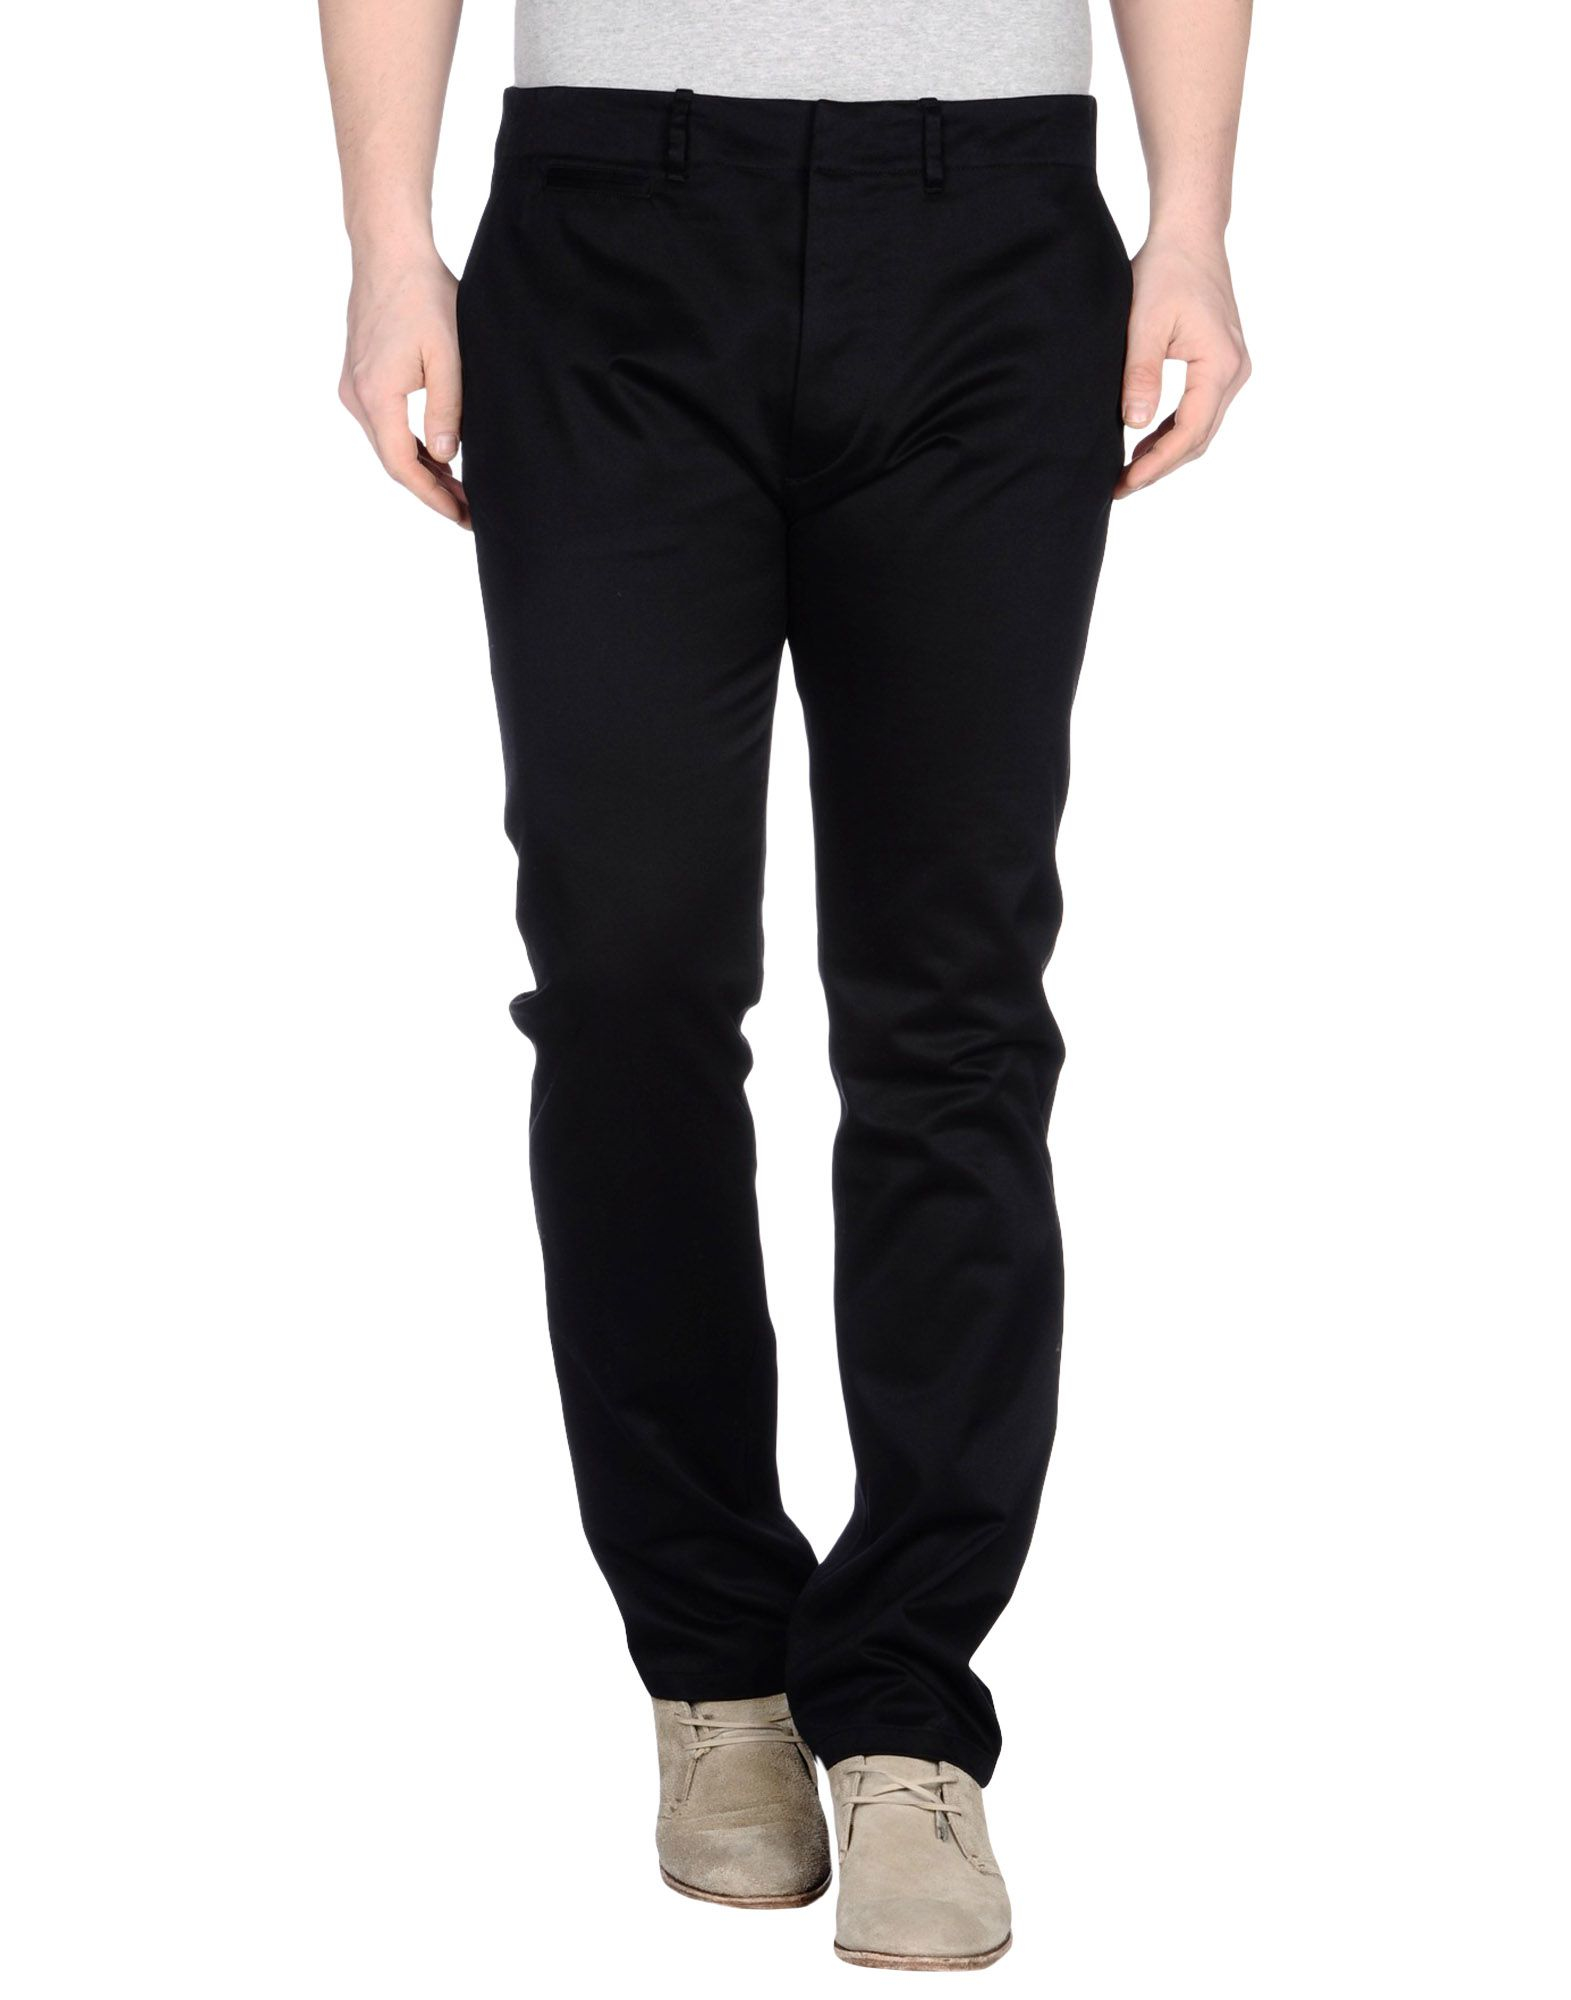 Lyst - Roberto Cavalli Denim Pants in Black for Men